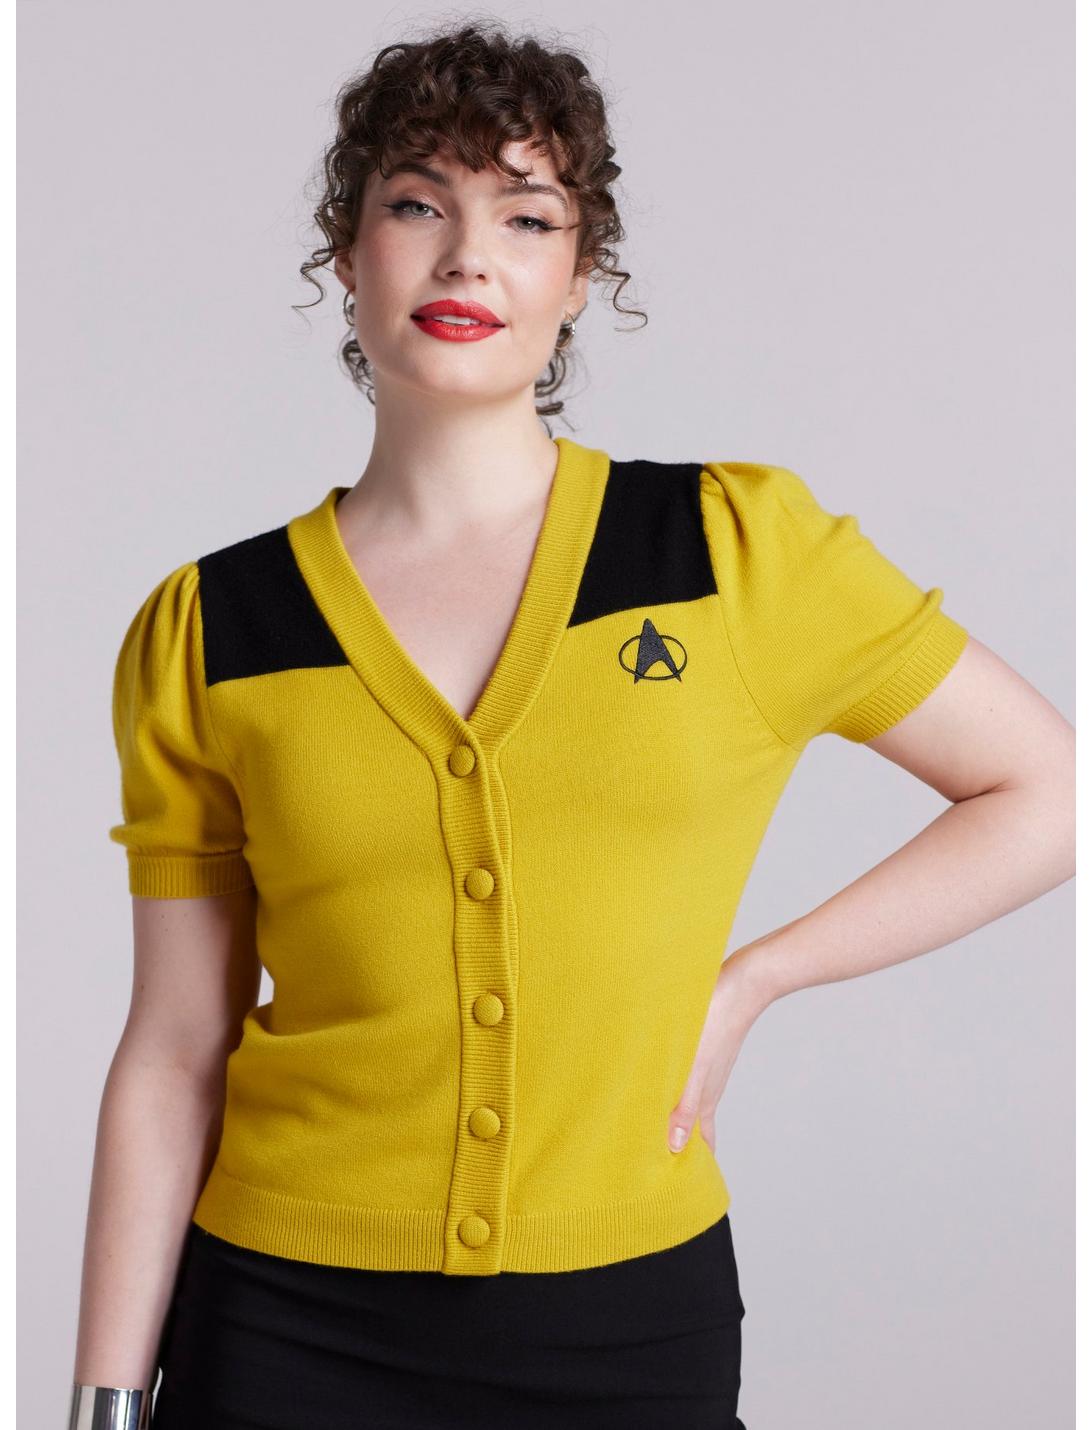 Her Universe Star Trek Yellow Uniform Short-Sleeve Cardigan Her Universe Exclusive, MULTI, hi-res